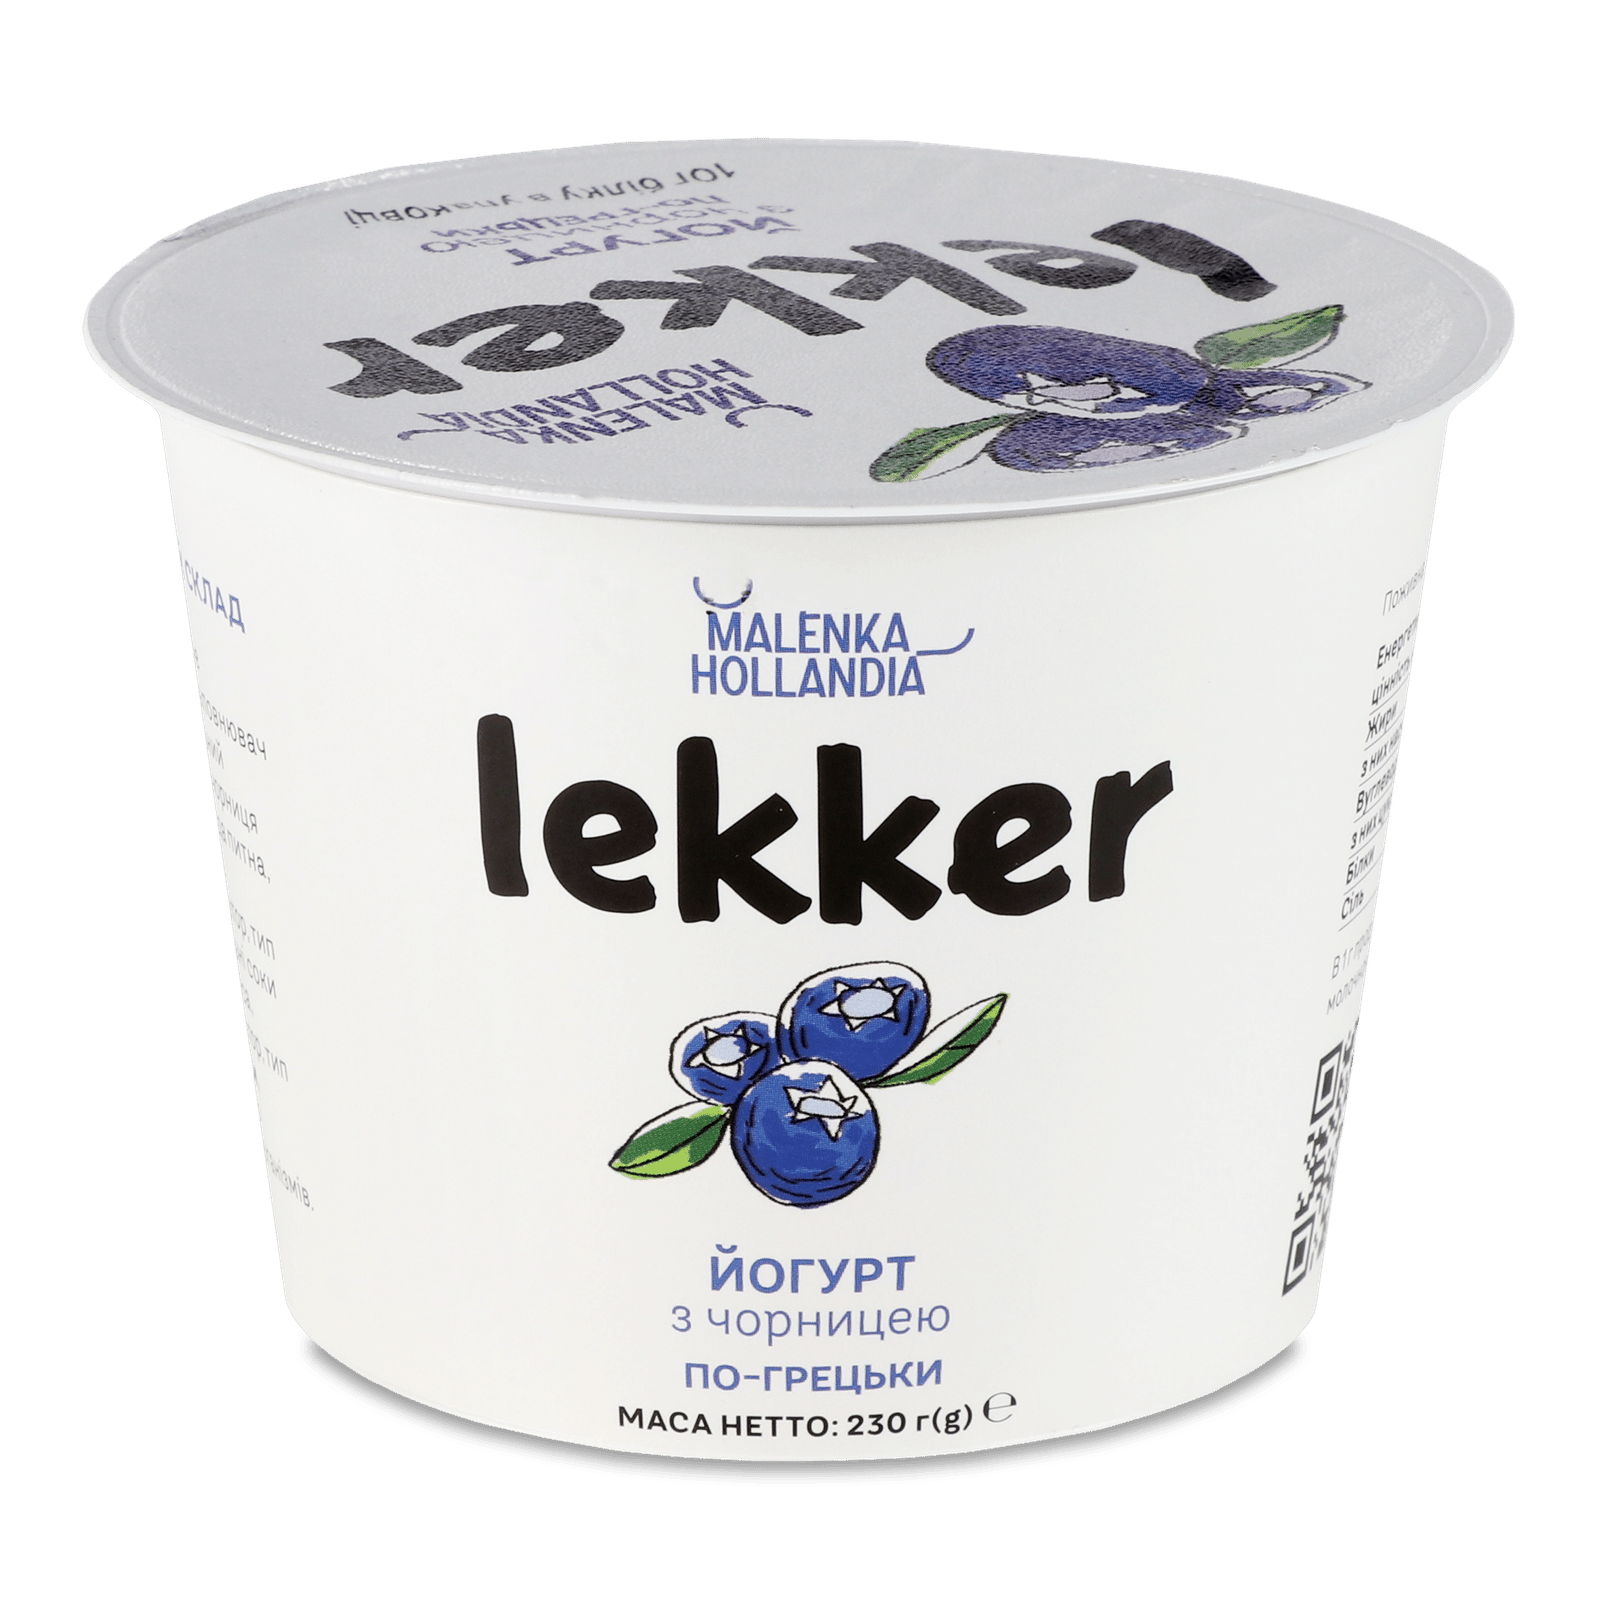 Йогурт Lekker з чорницею по-грецьки 3% - 1